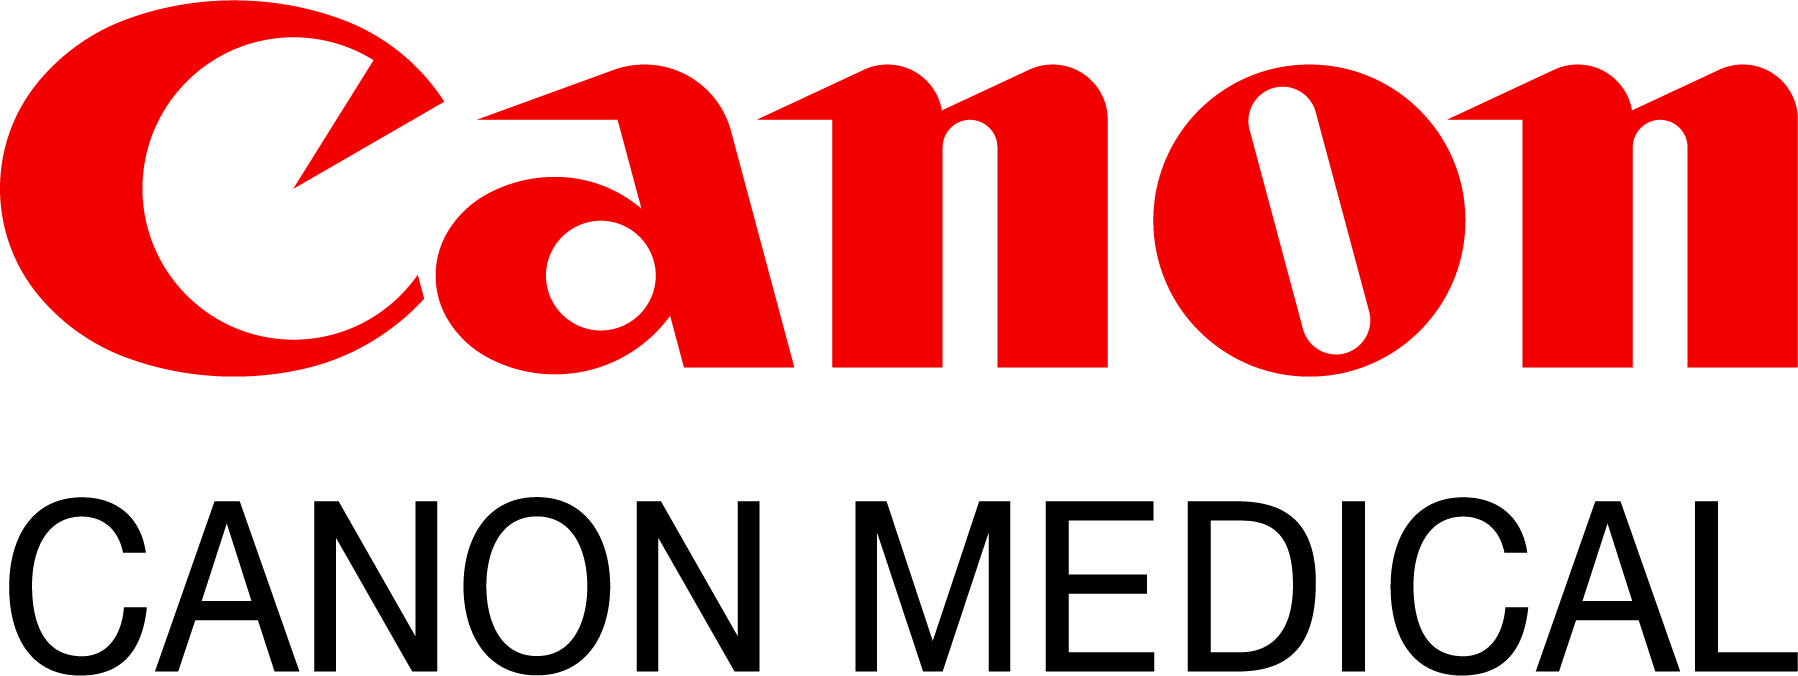 Canon Medical Logo - CanonMedical Society for Ultrasound in Medicine